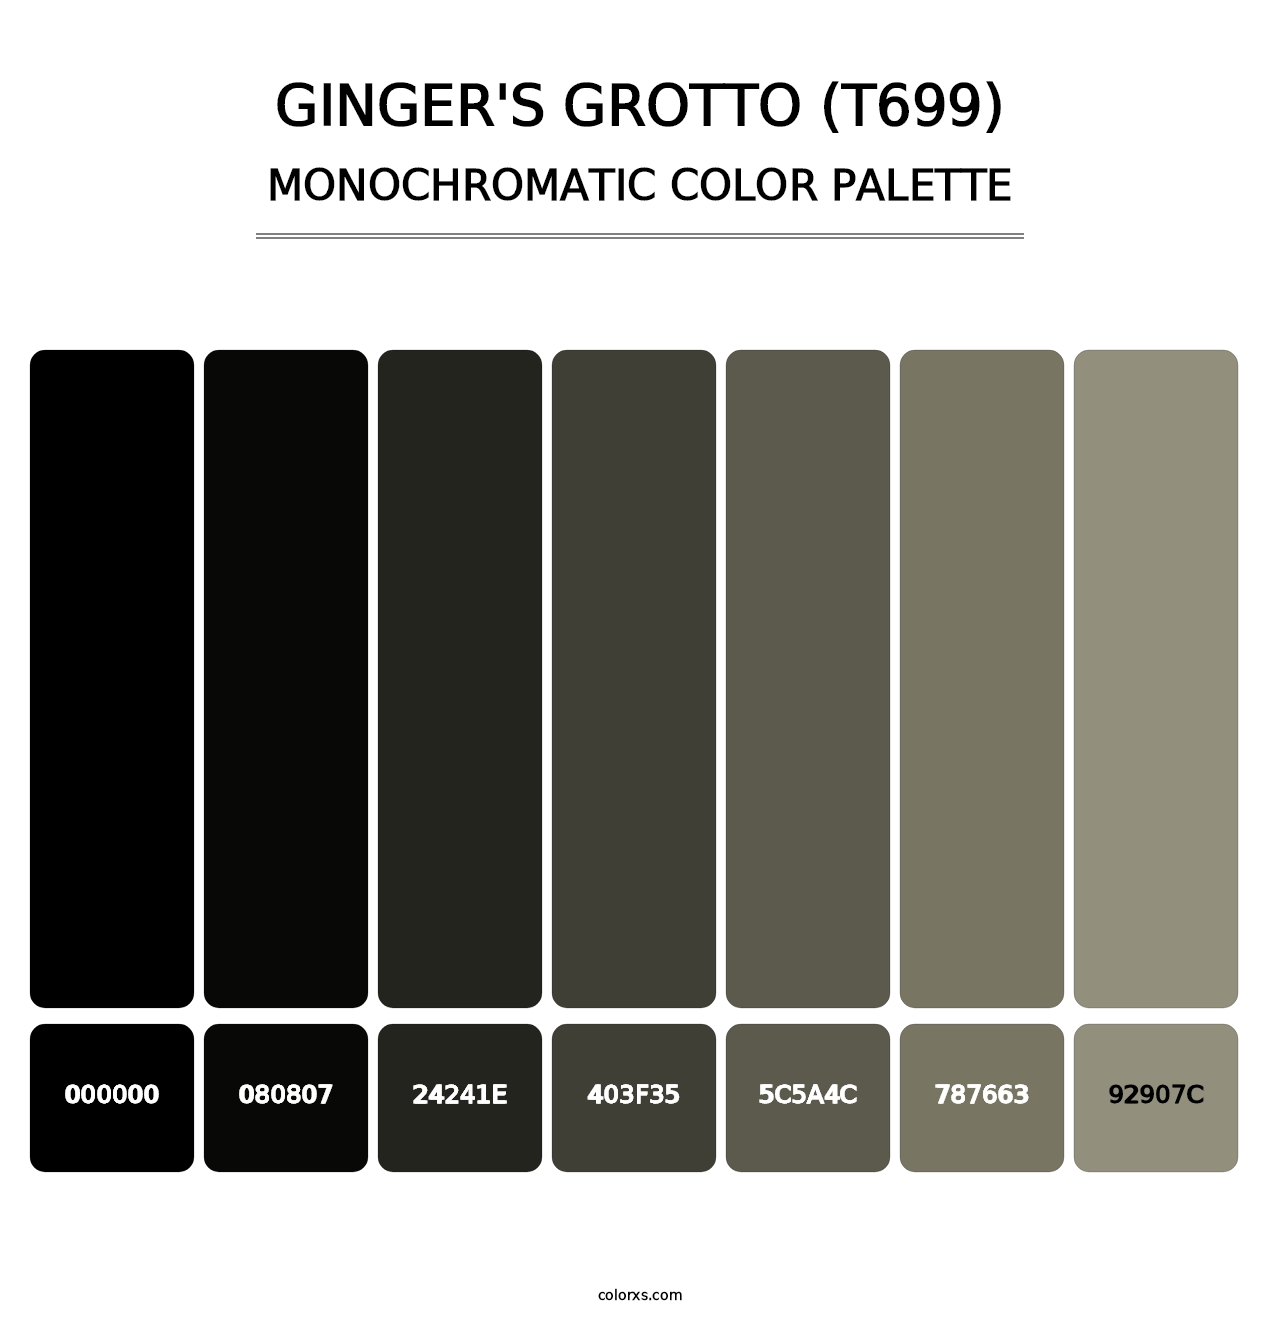 Ginger's Grotto (T699) - Monochromatic Color Palette